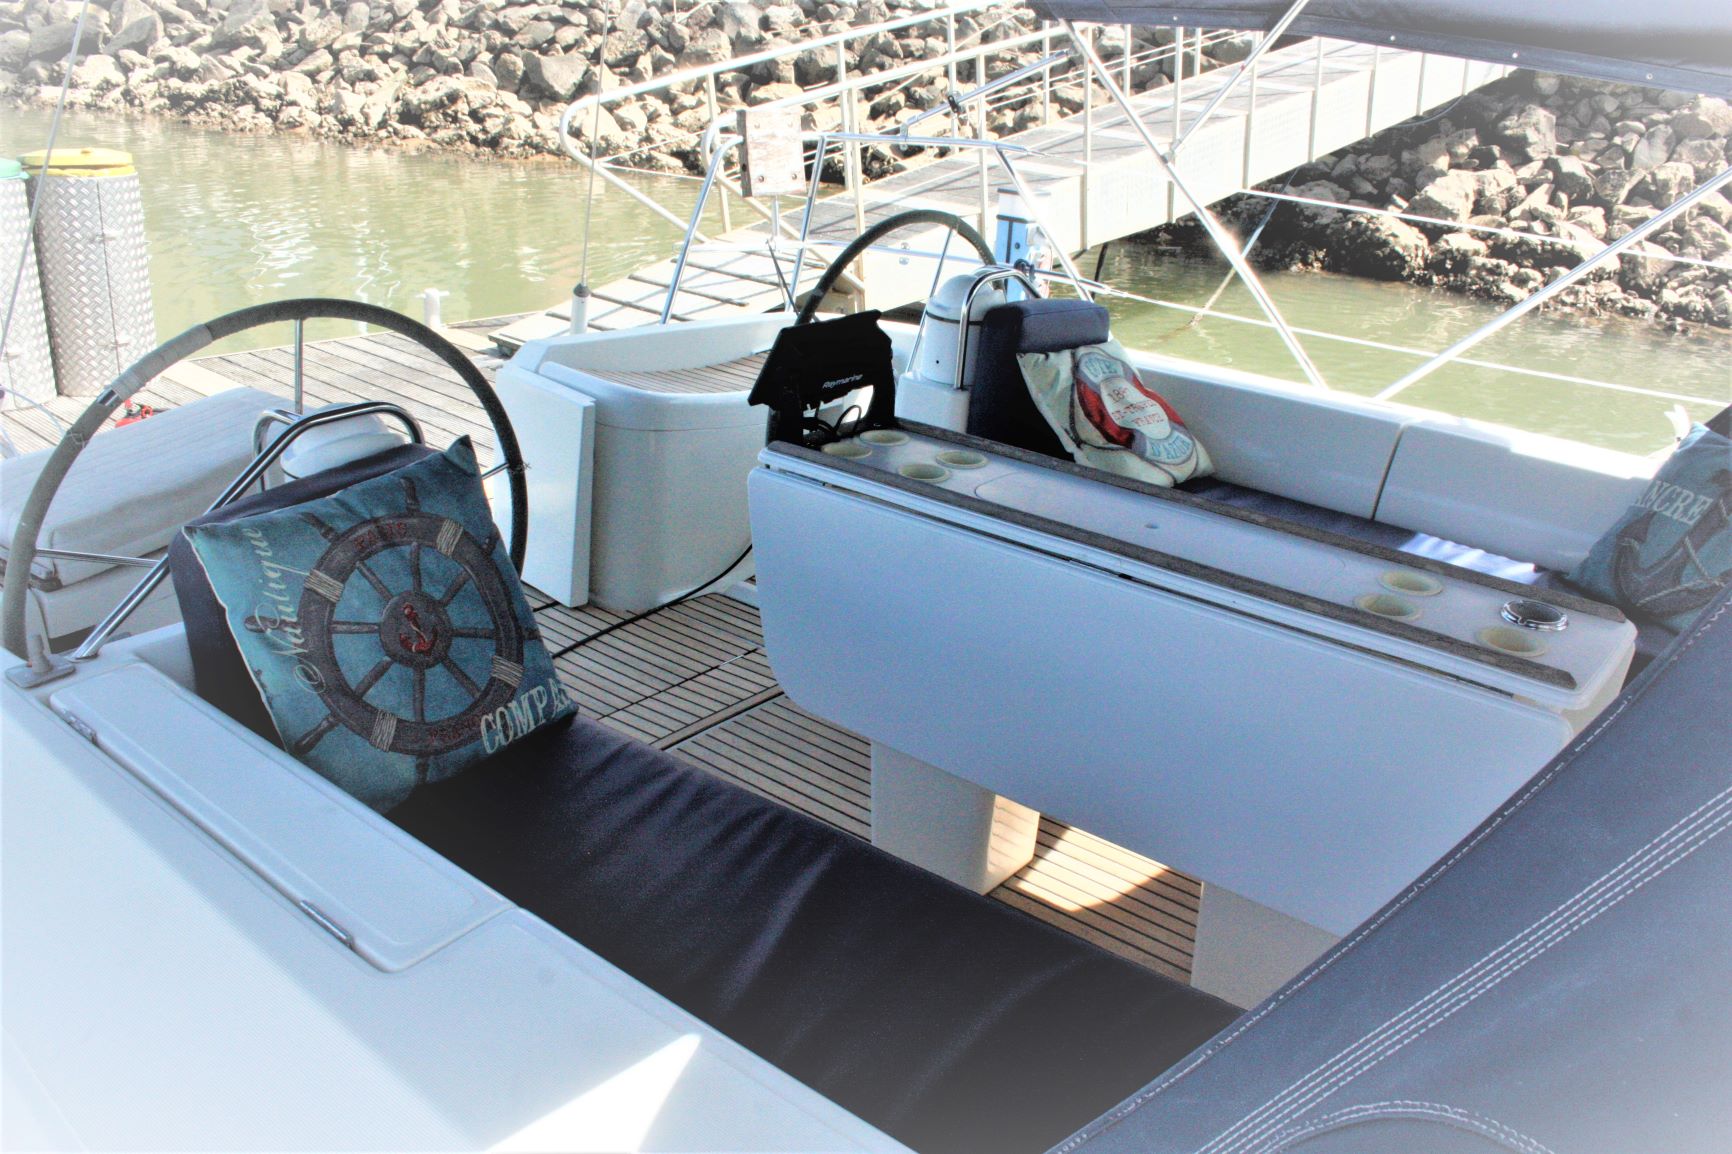 Luxury Sailing Yacht Charter in Vilamoura